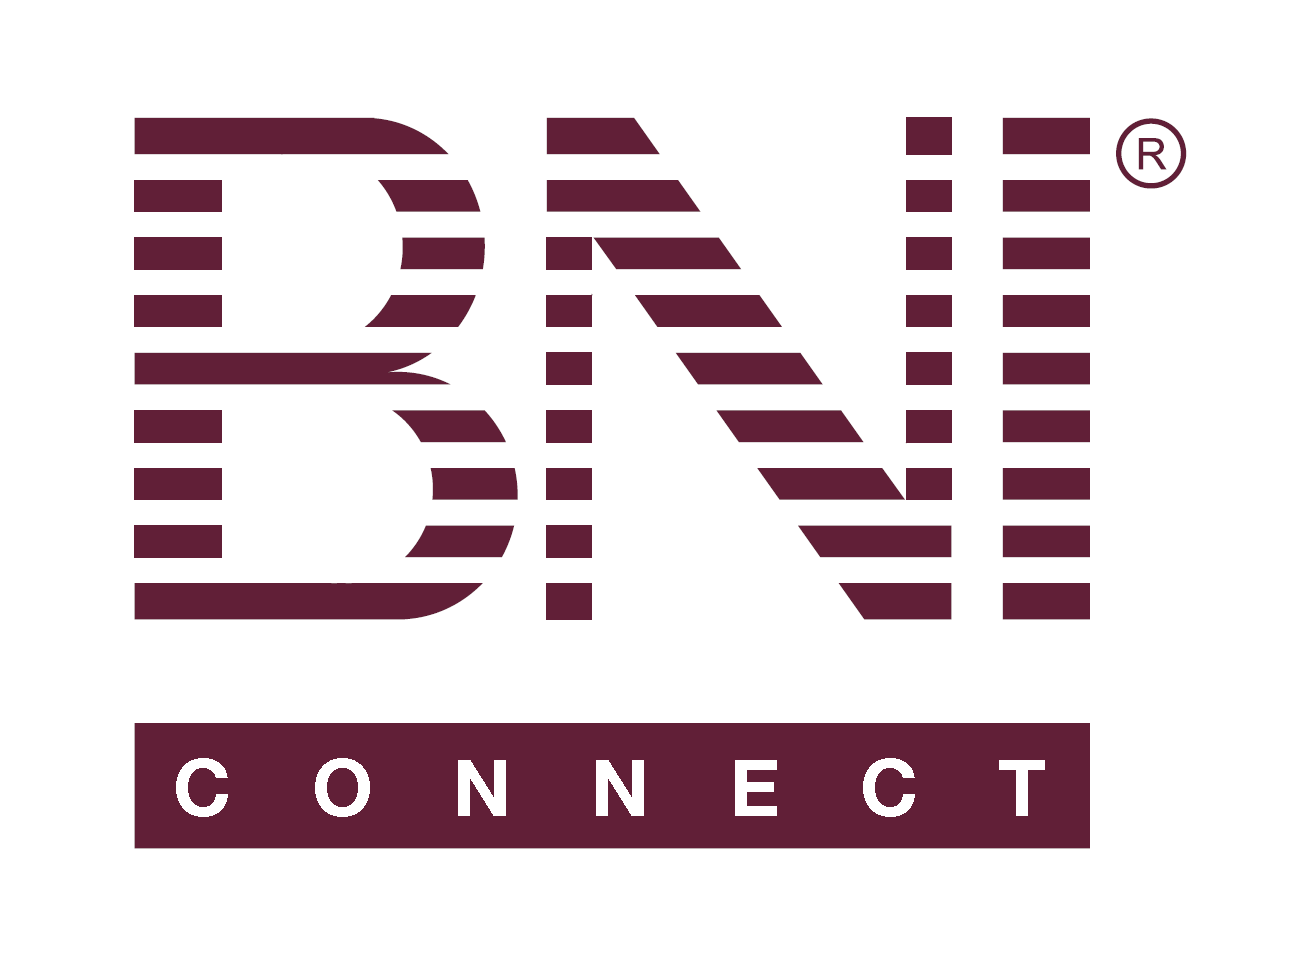 BNI Connect